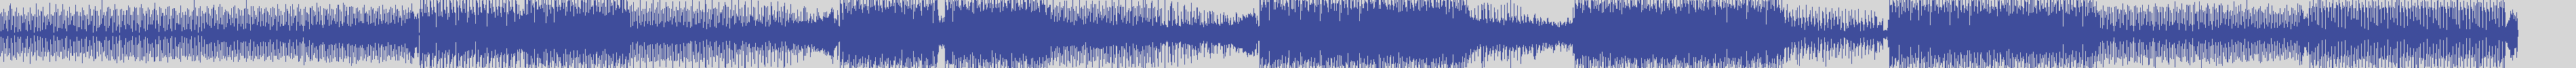 suxess [SX005] Dyson Kellerman - Get You [Highpass Mix] audio wave form